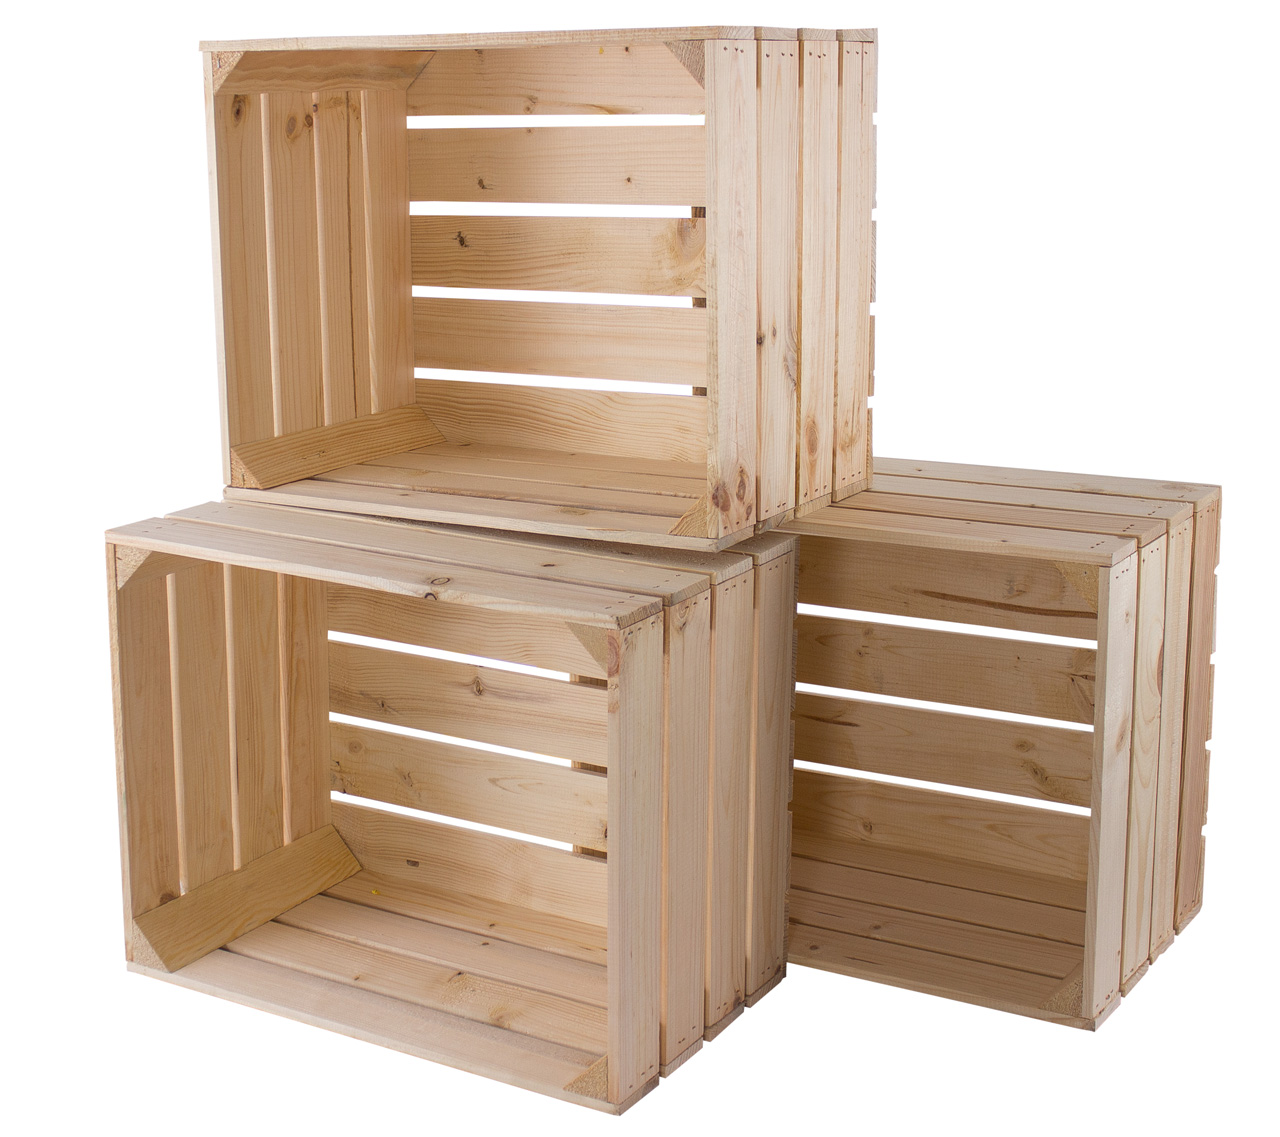 Houten kistje kopen? Online grootste assortiment houten kistjes | Kisten Koning